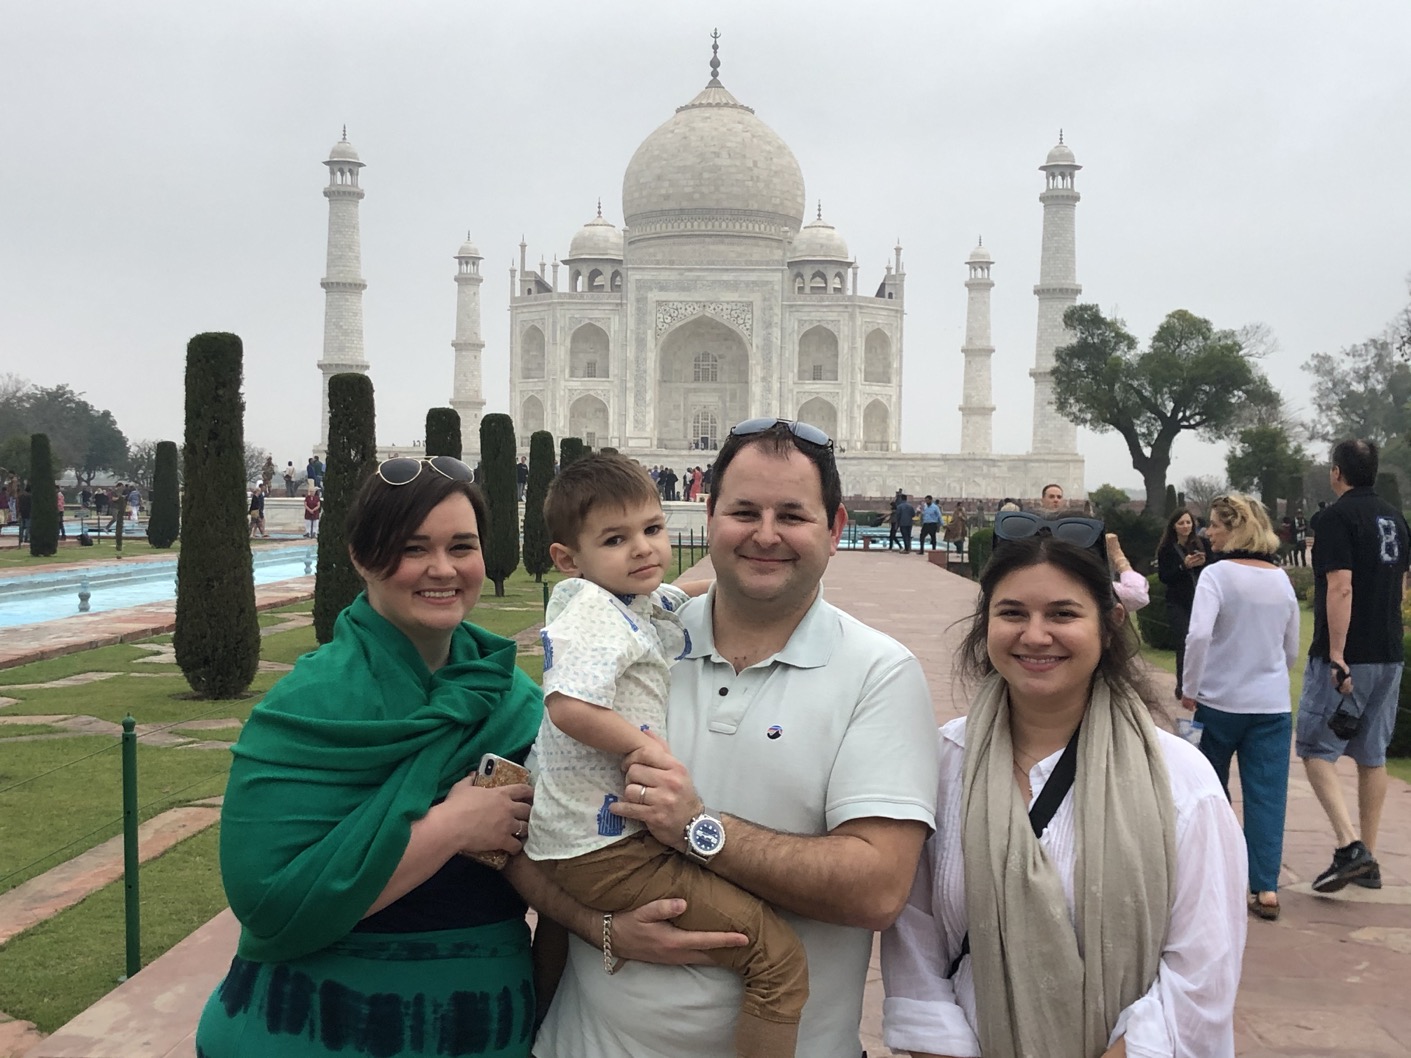 A highlight on our family India tripThe Taj Mahal